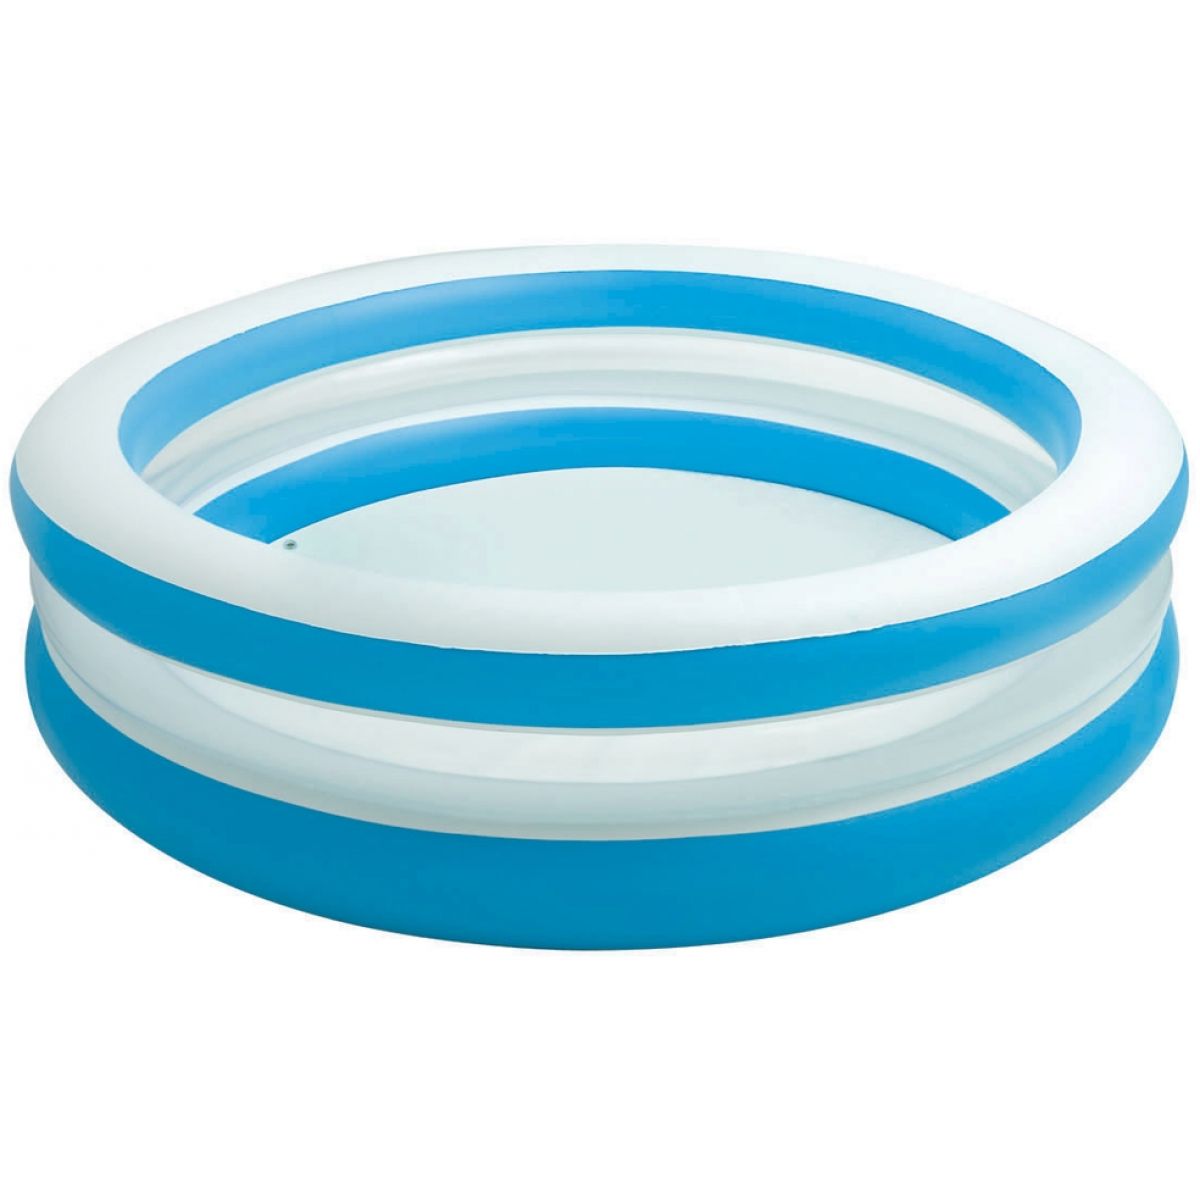 Intex 57489 Bazén kruhový průhledný 203cm - Modrobílá